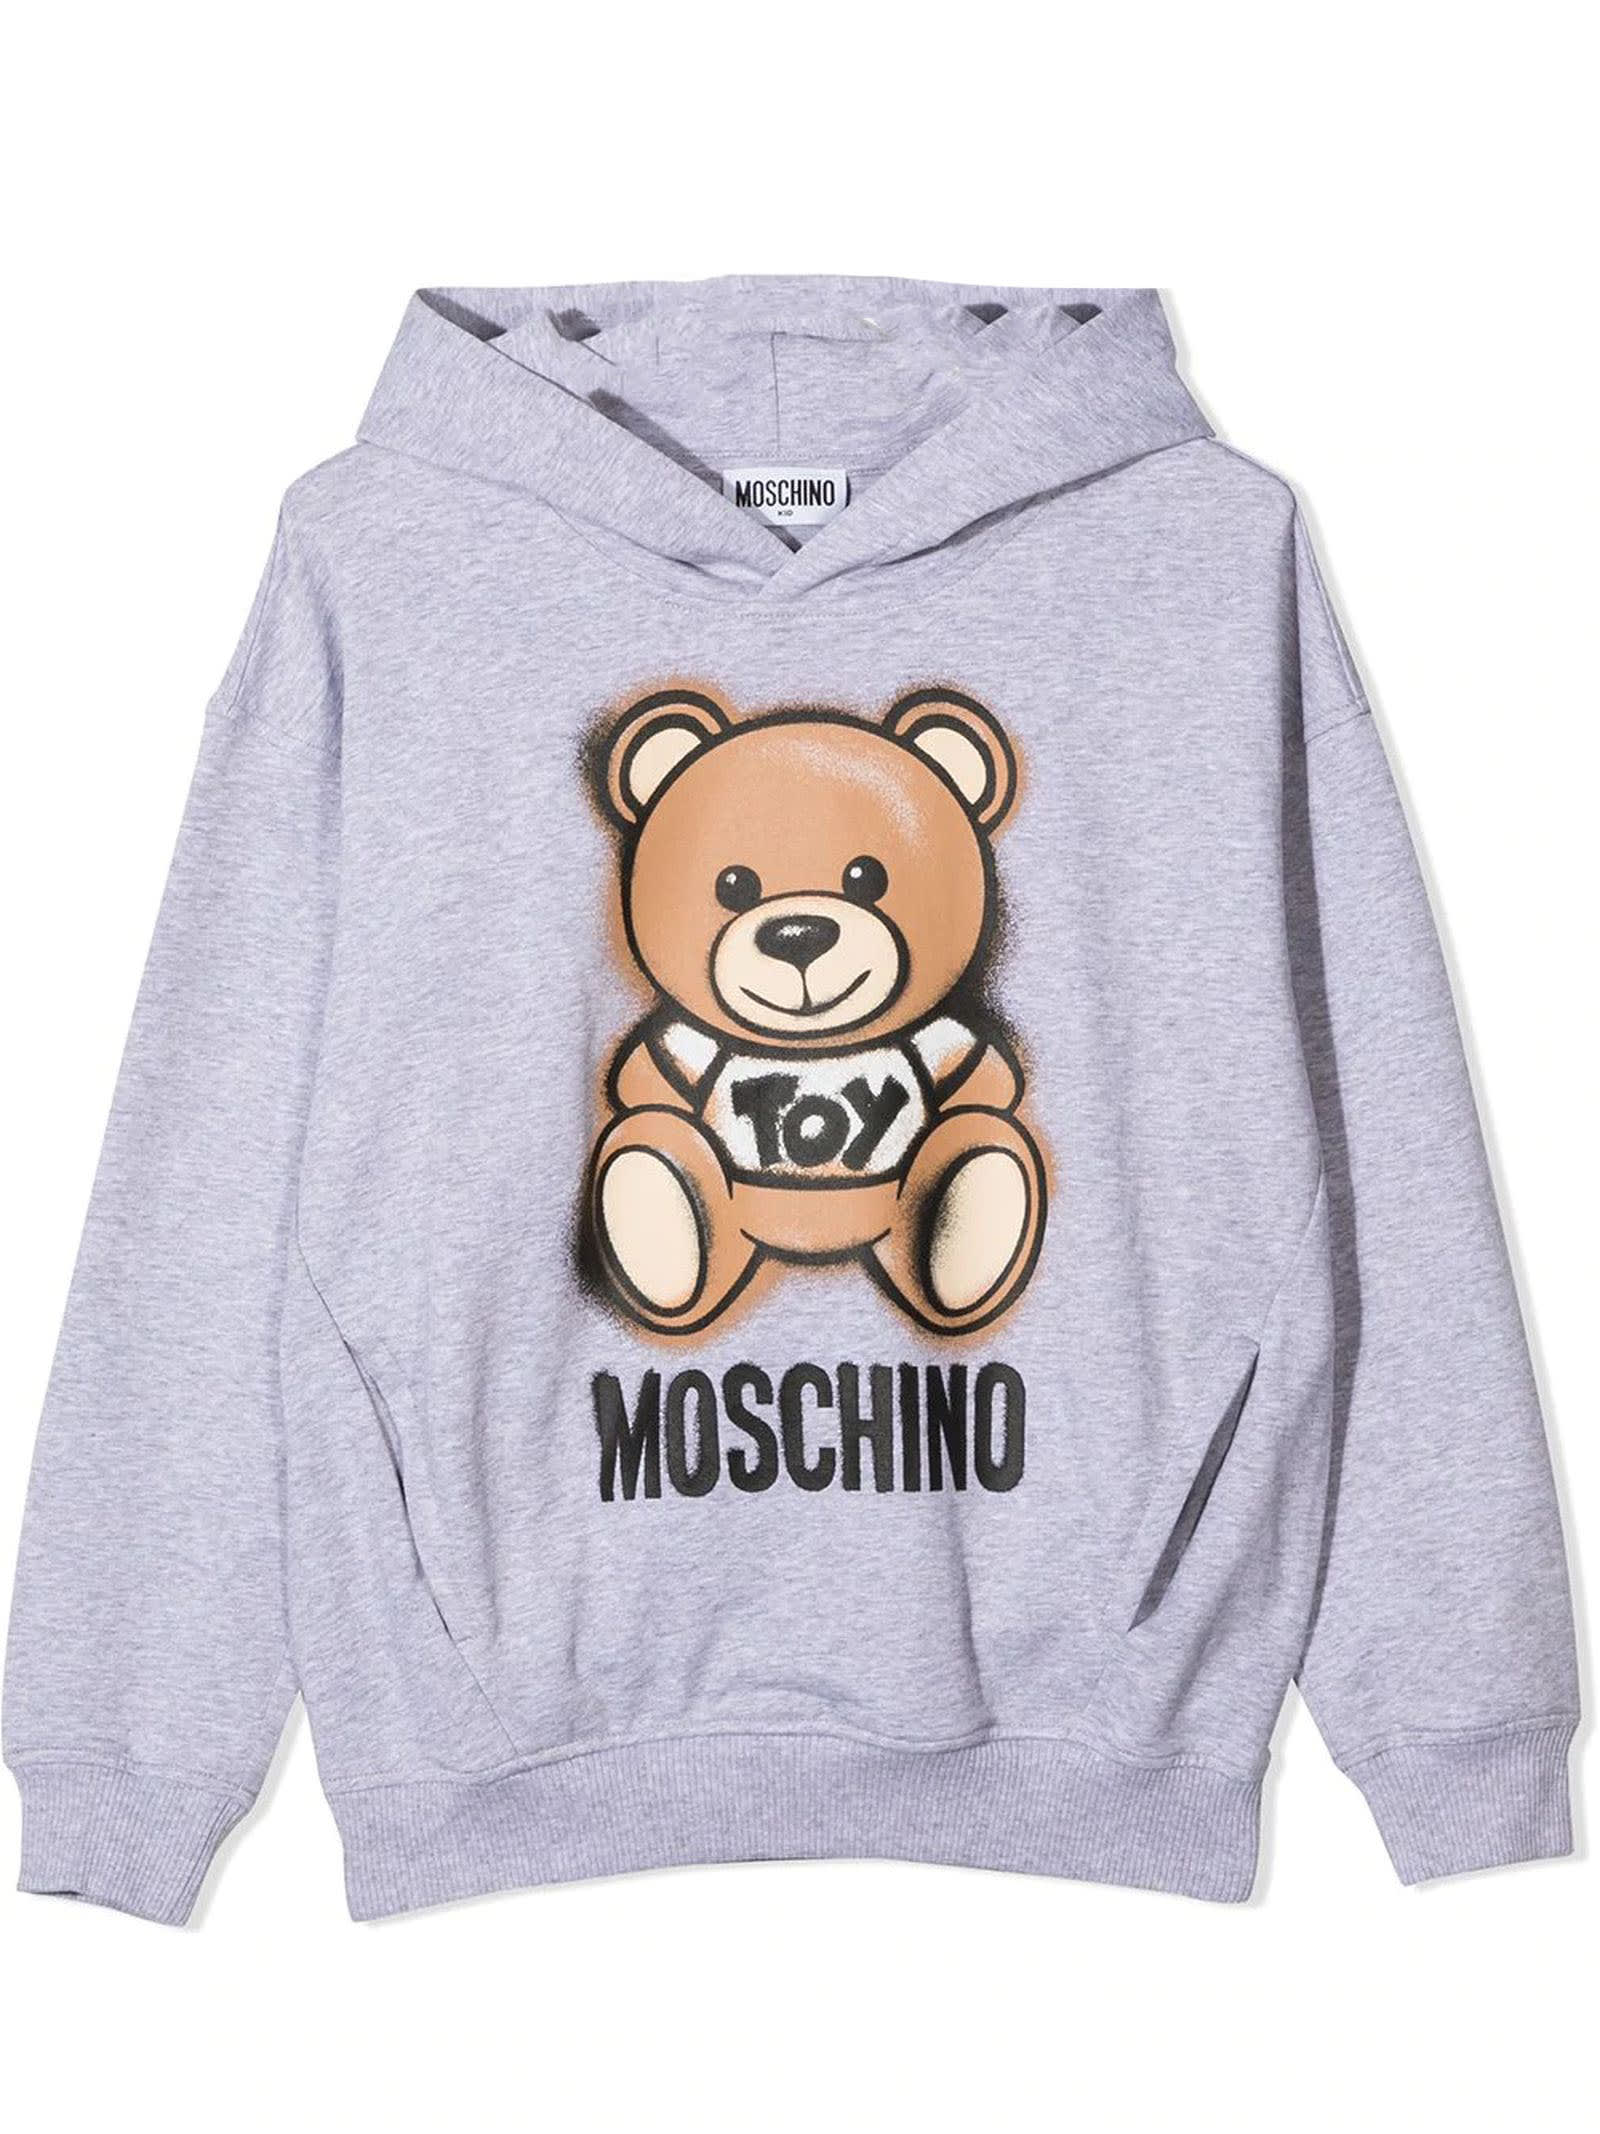 Moschino grey stretch cotton hoodie